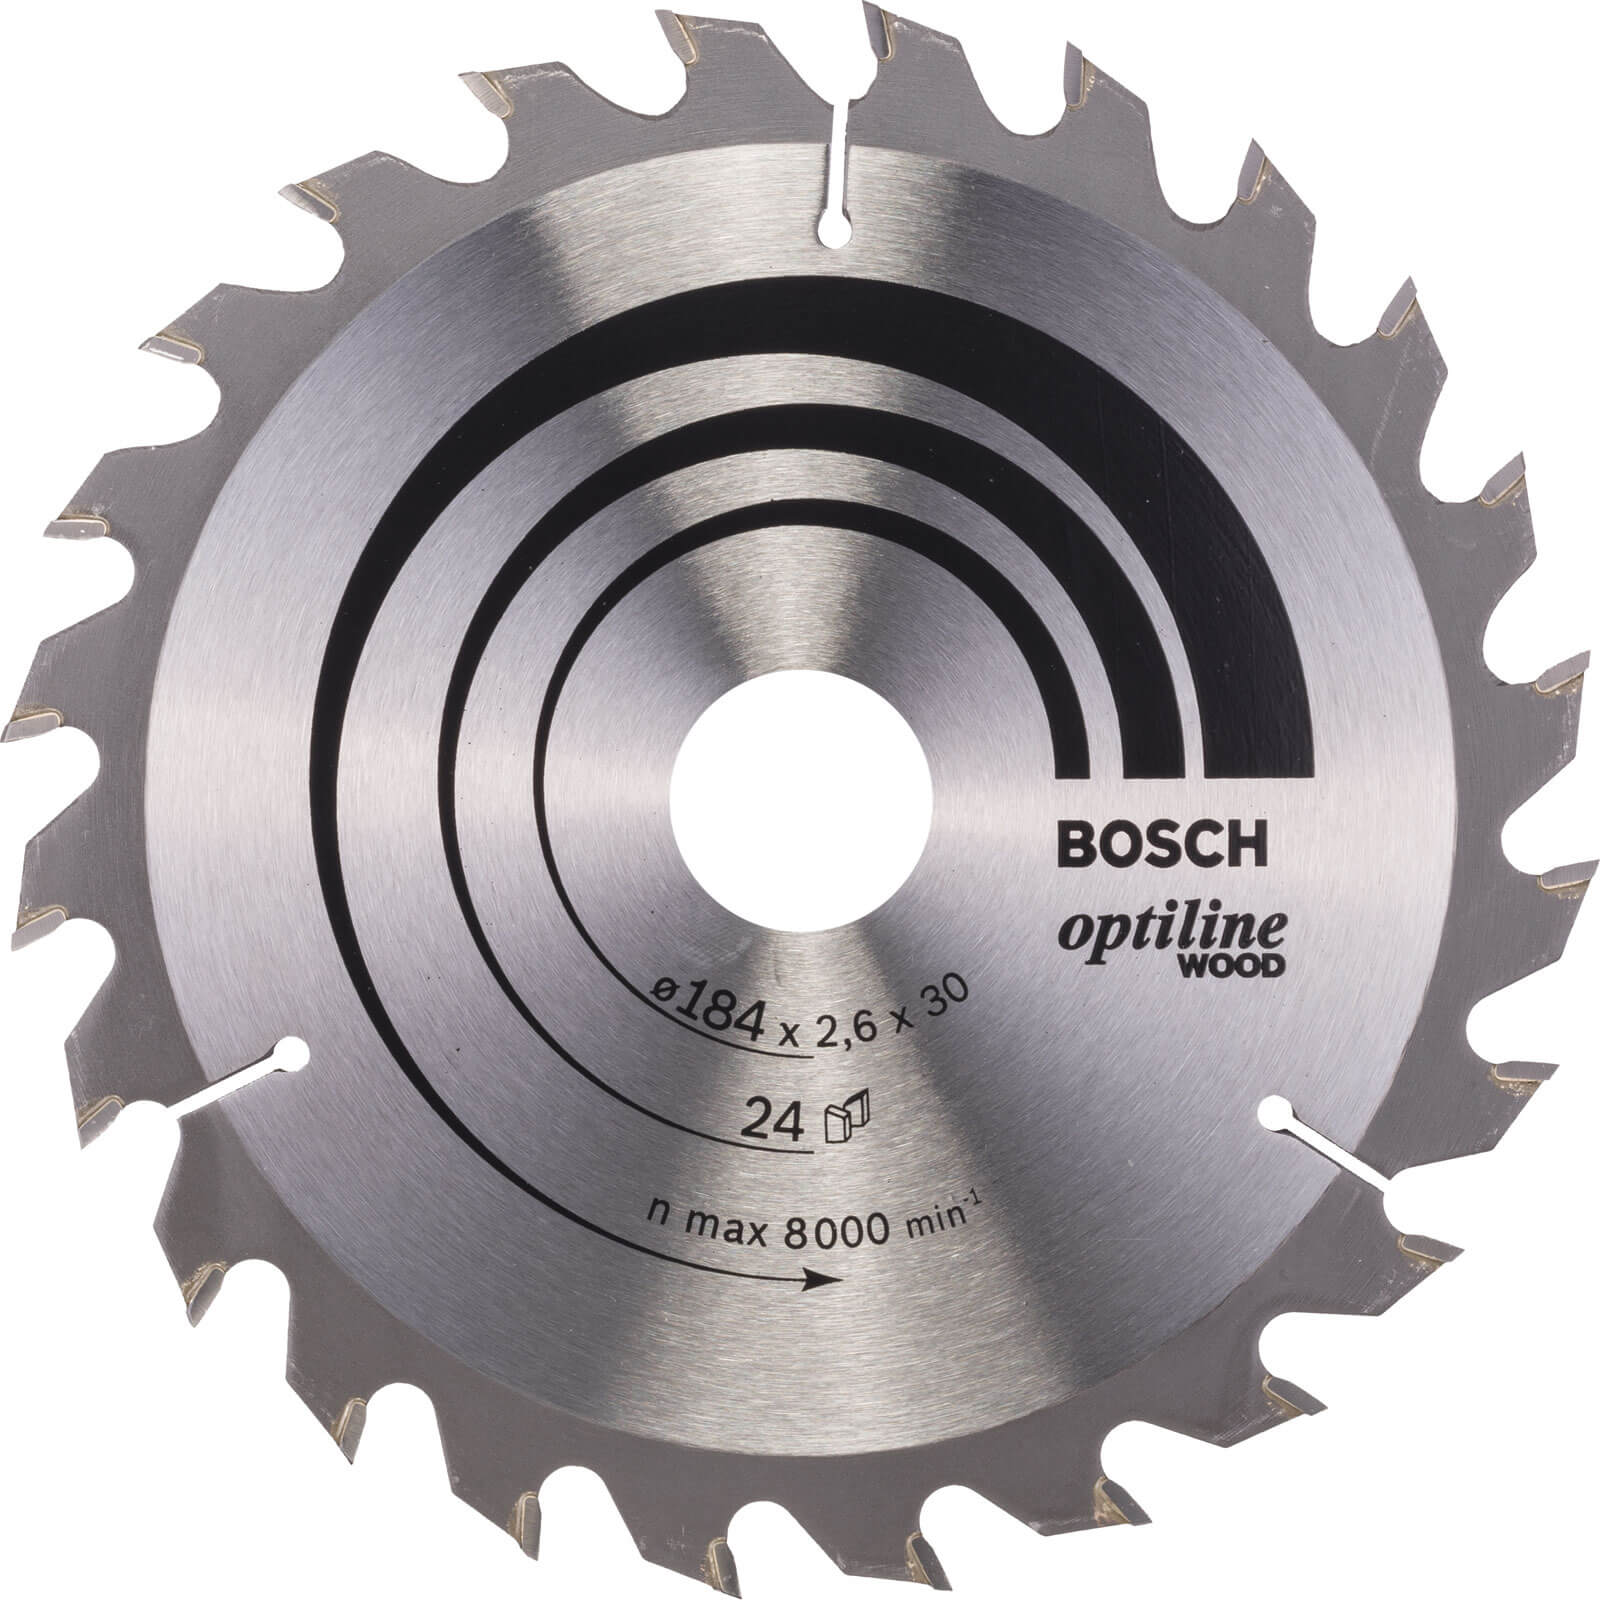 Photo of Bosch Optiline Wood Cutting Saw Blade 184mm 24t 30mm